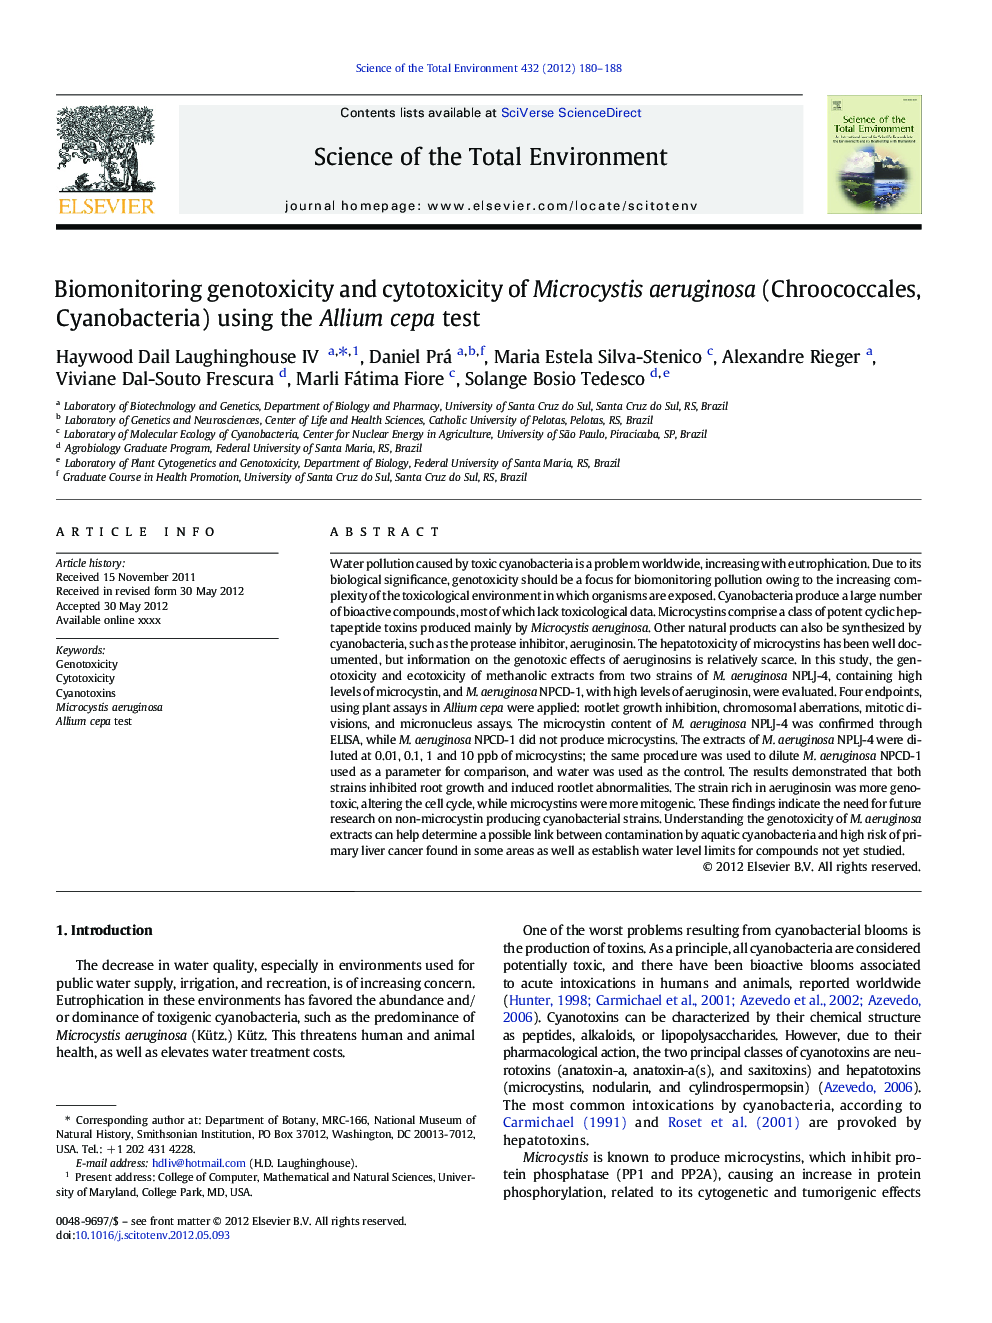 Biomonitoring genotoxicity and cytotoxicity of Microcystis aeruginosa (Chroococcales, Cyanobacteria) using the Allium cepa test